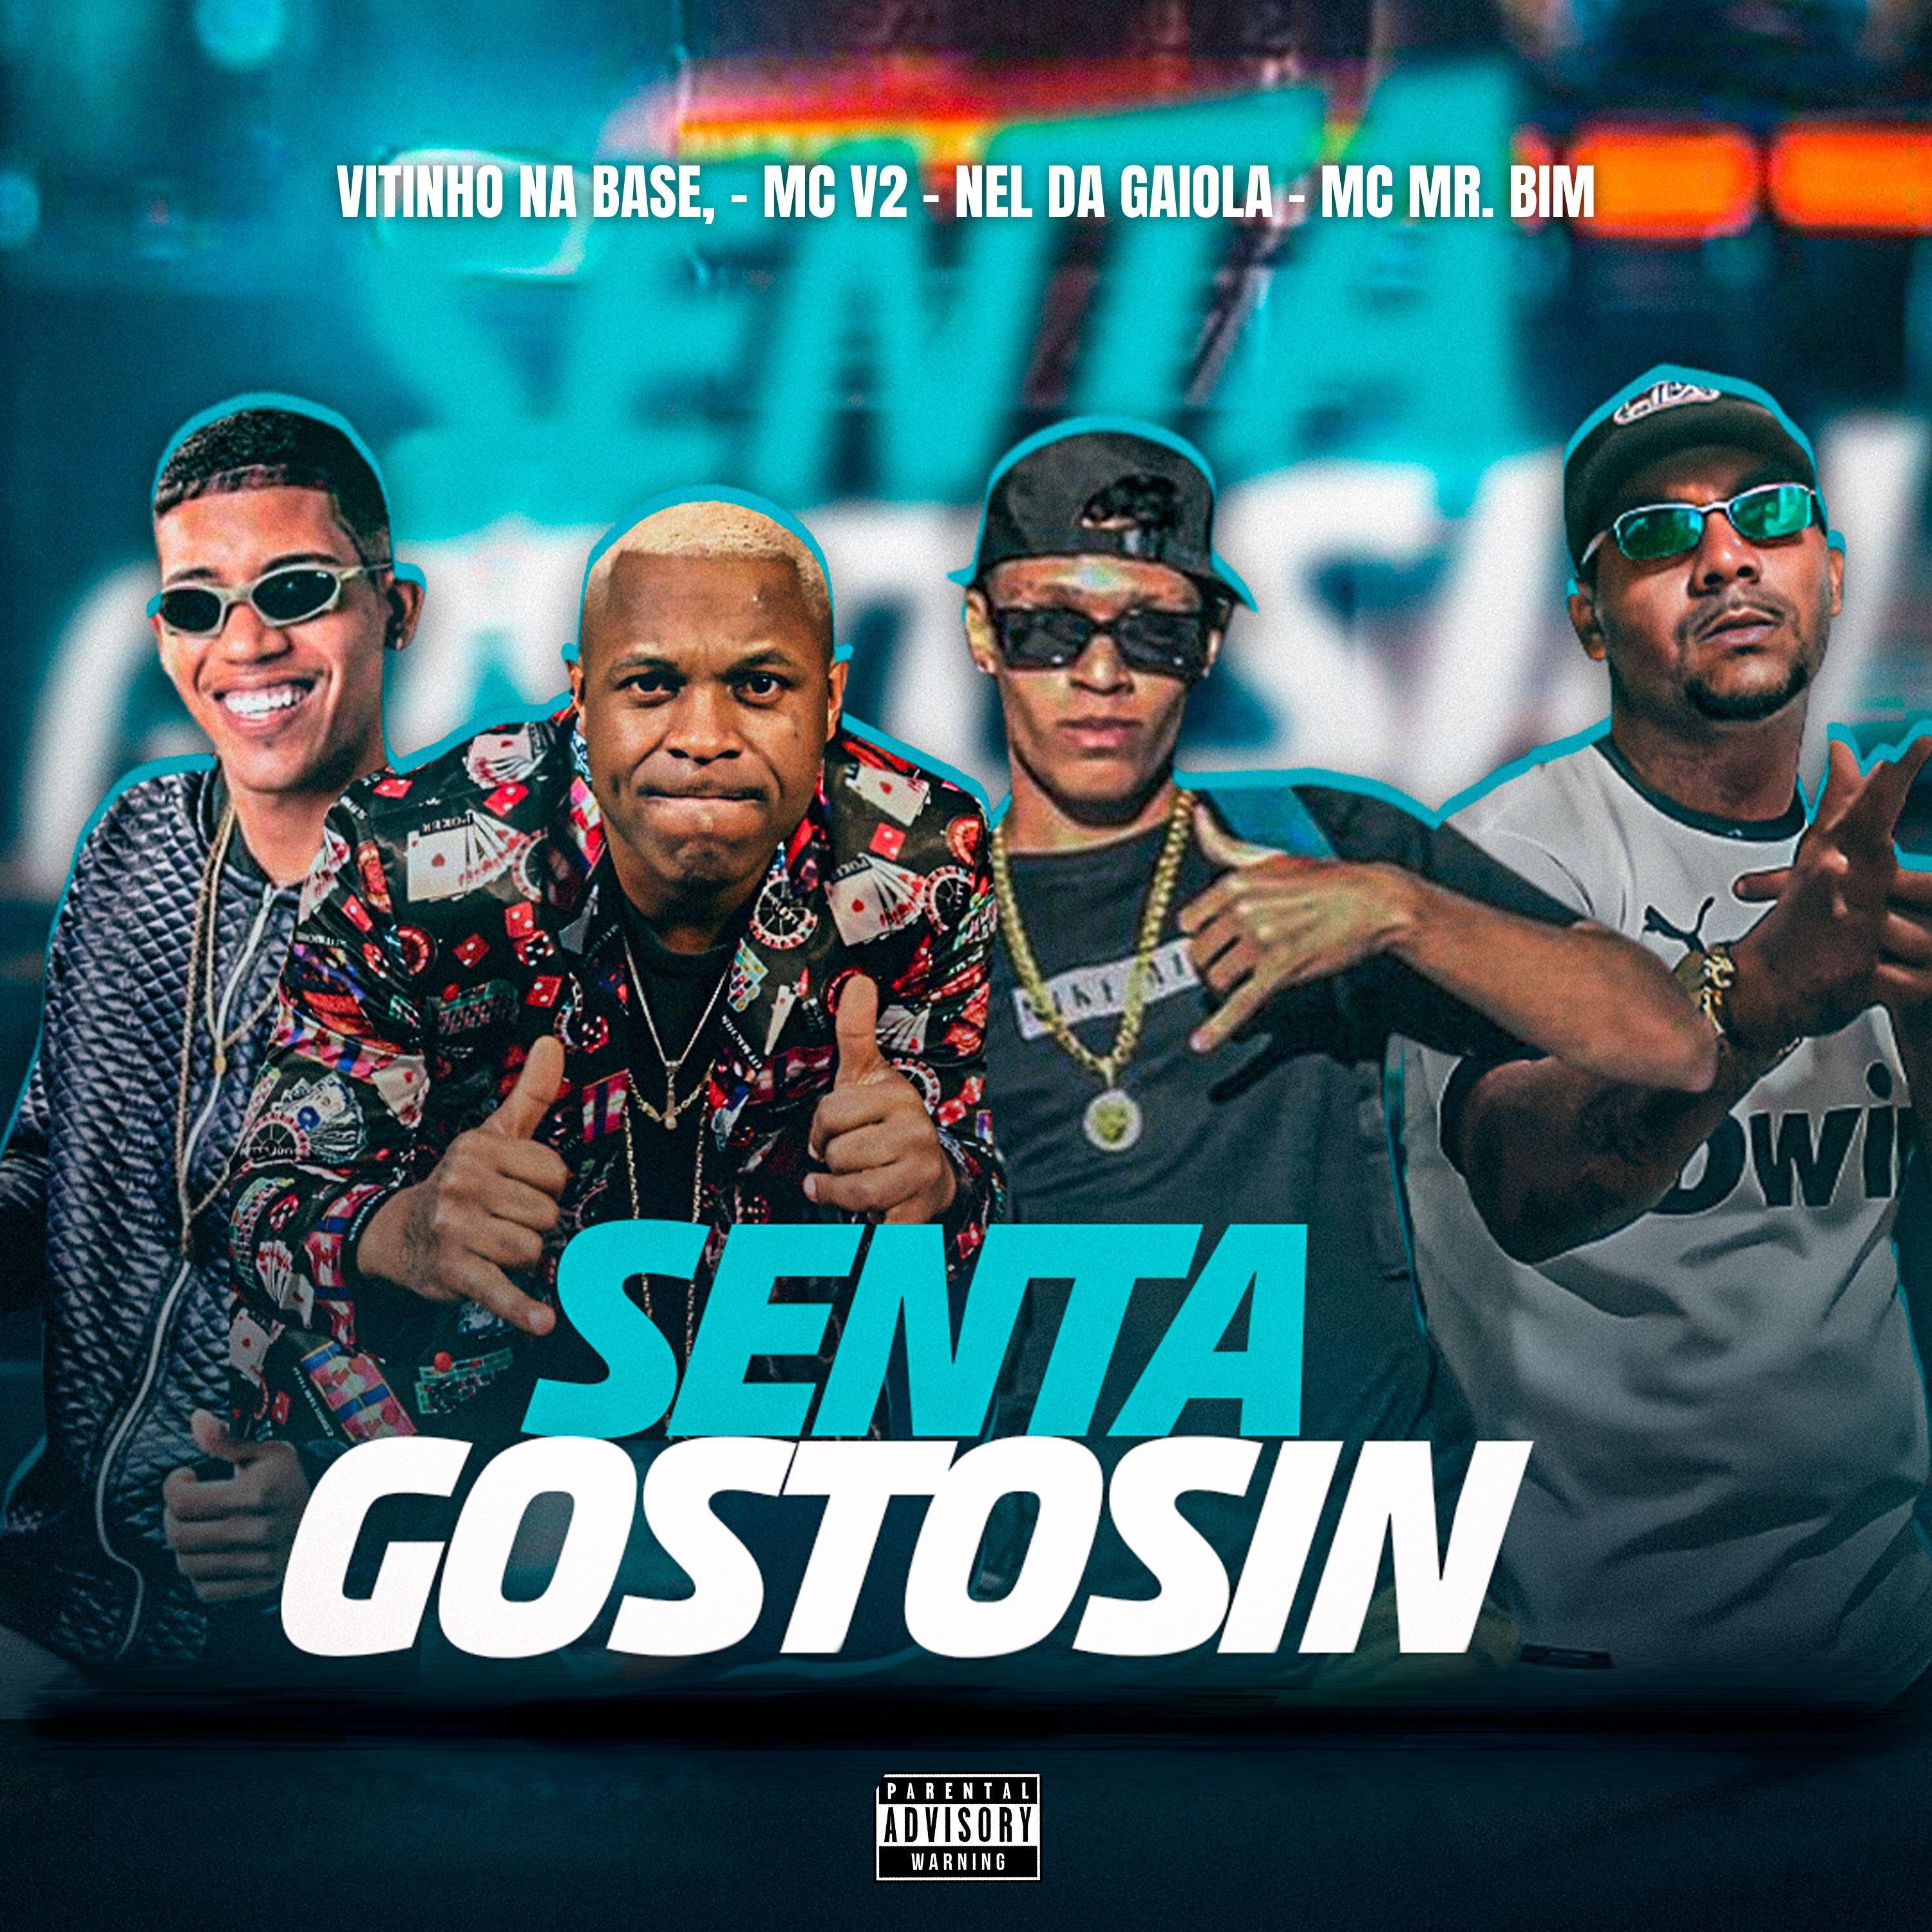 Vitinho Na Base - Senta Gostosin (feat. Mc Mr. Bim)